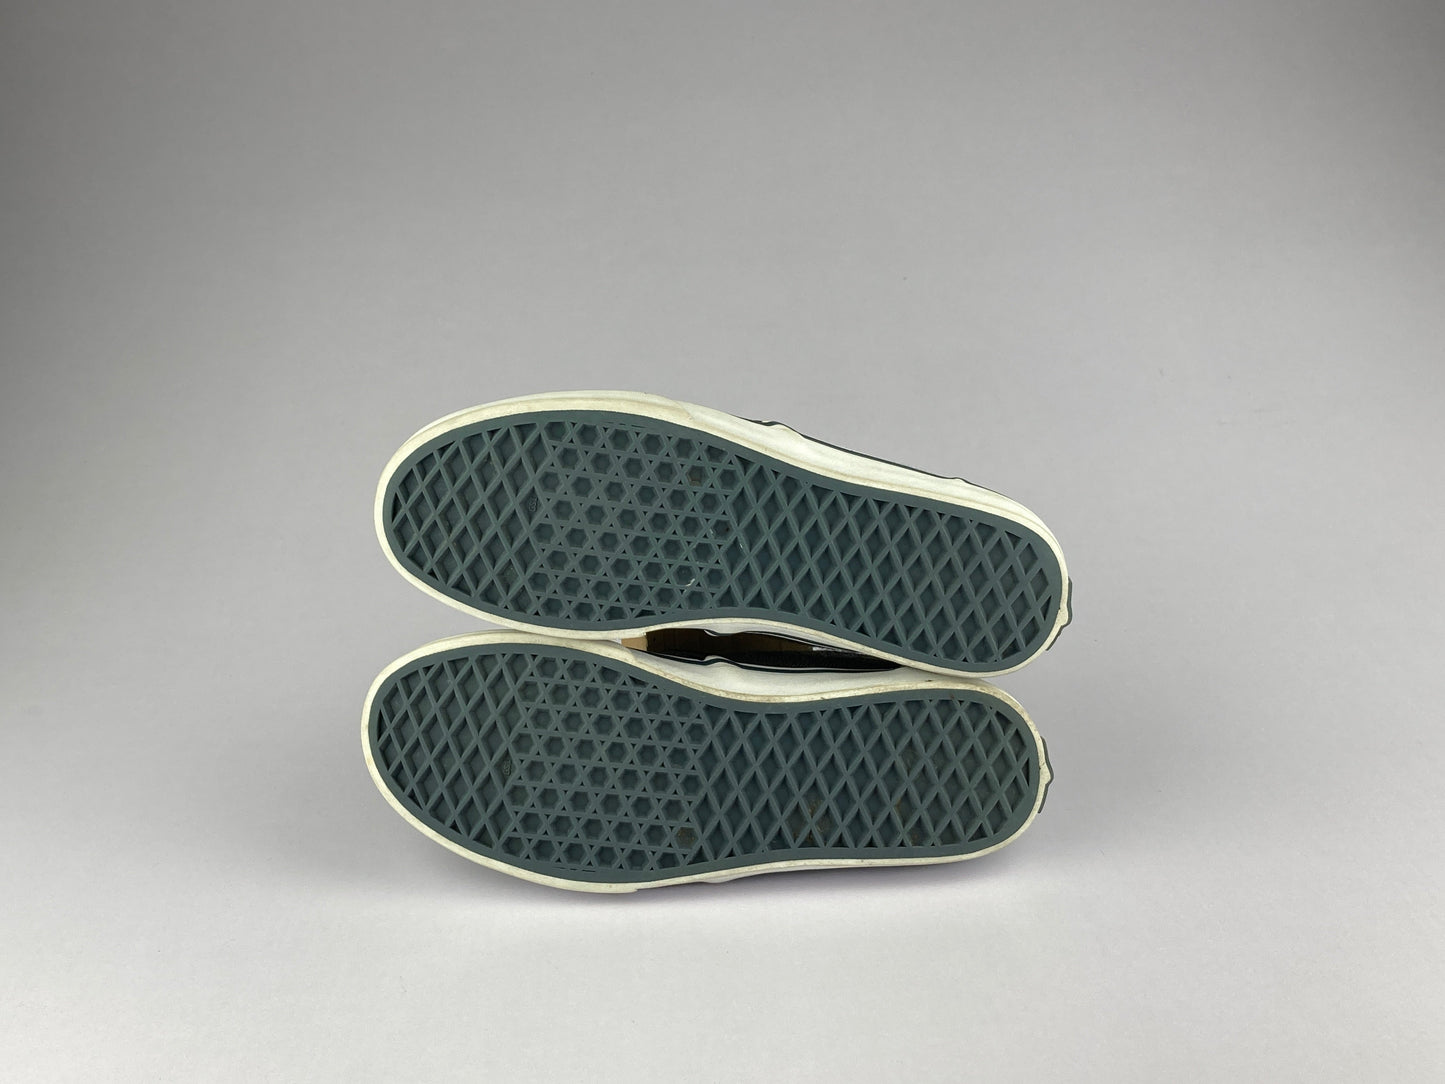 Vans Canvas Authentic Shoe 'Charcoal/White'-Sneakers-Athletic Corner